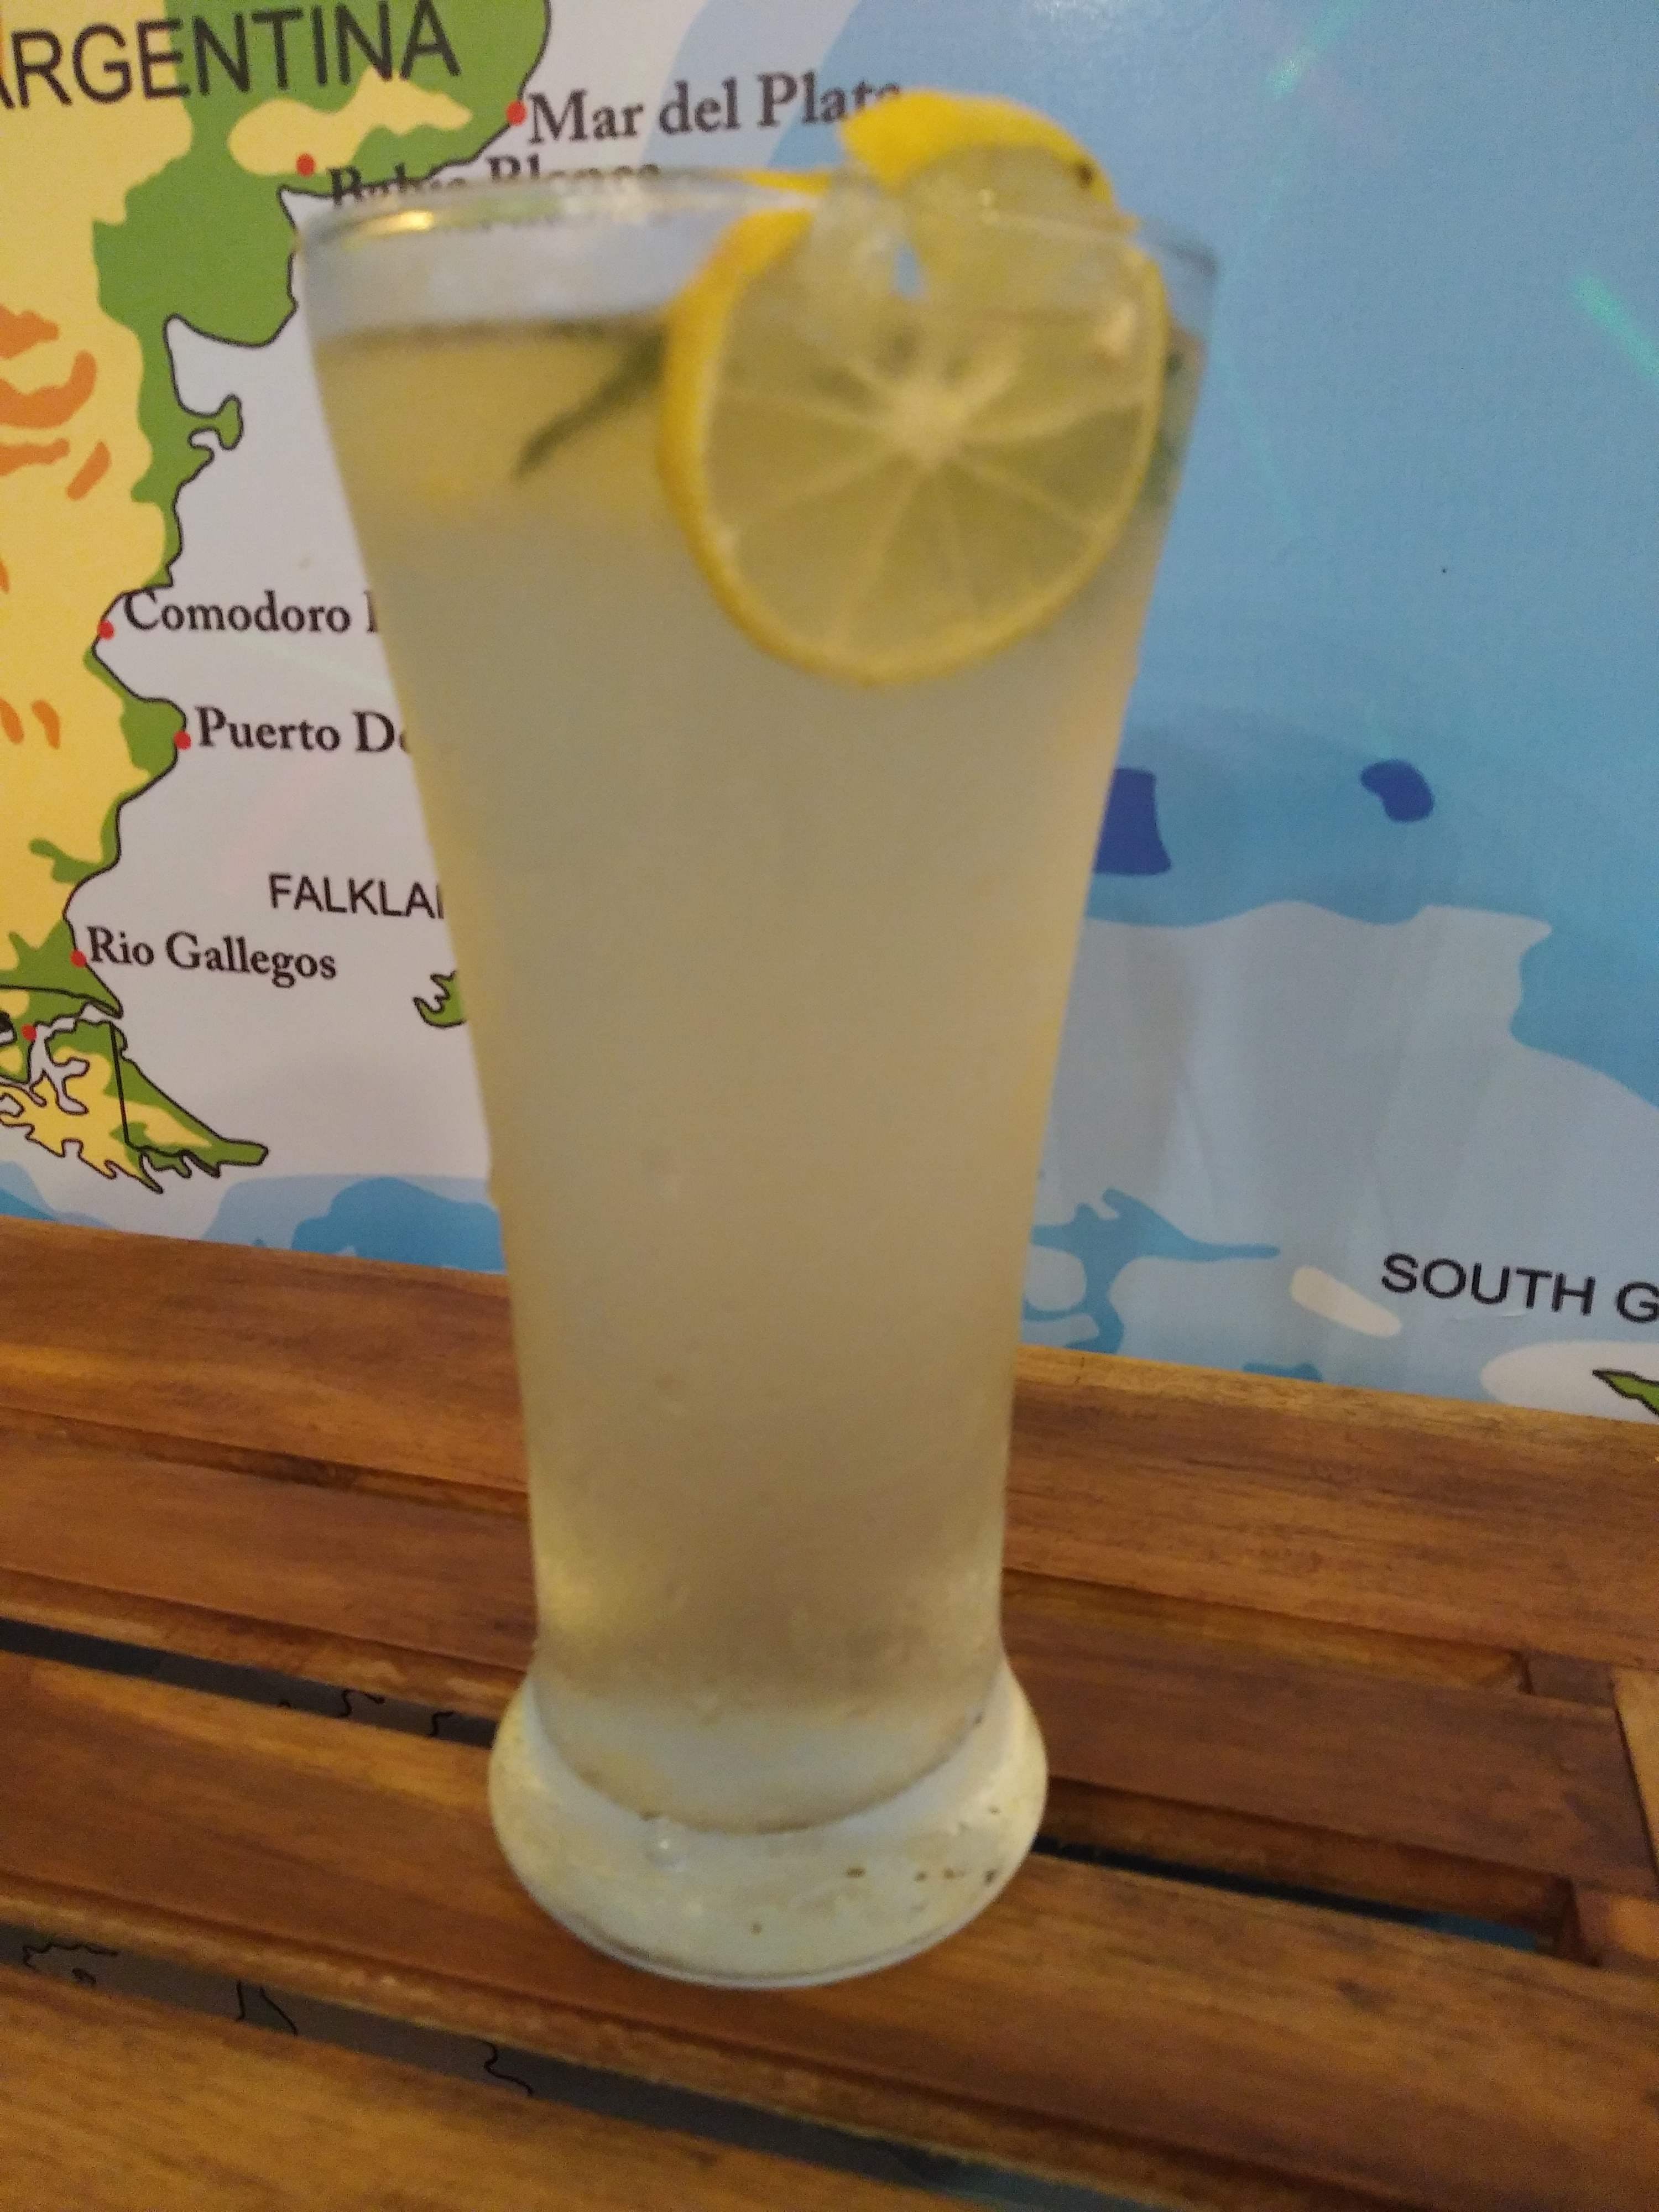 Drink,Lemonsoda,Lemonade,Limonana,Lemon juice,Lemon-lime,Juice,Lemon,Cocktail garnish,Food